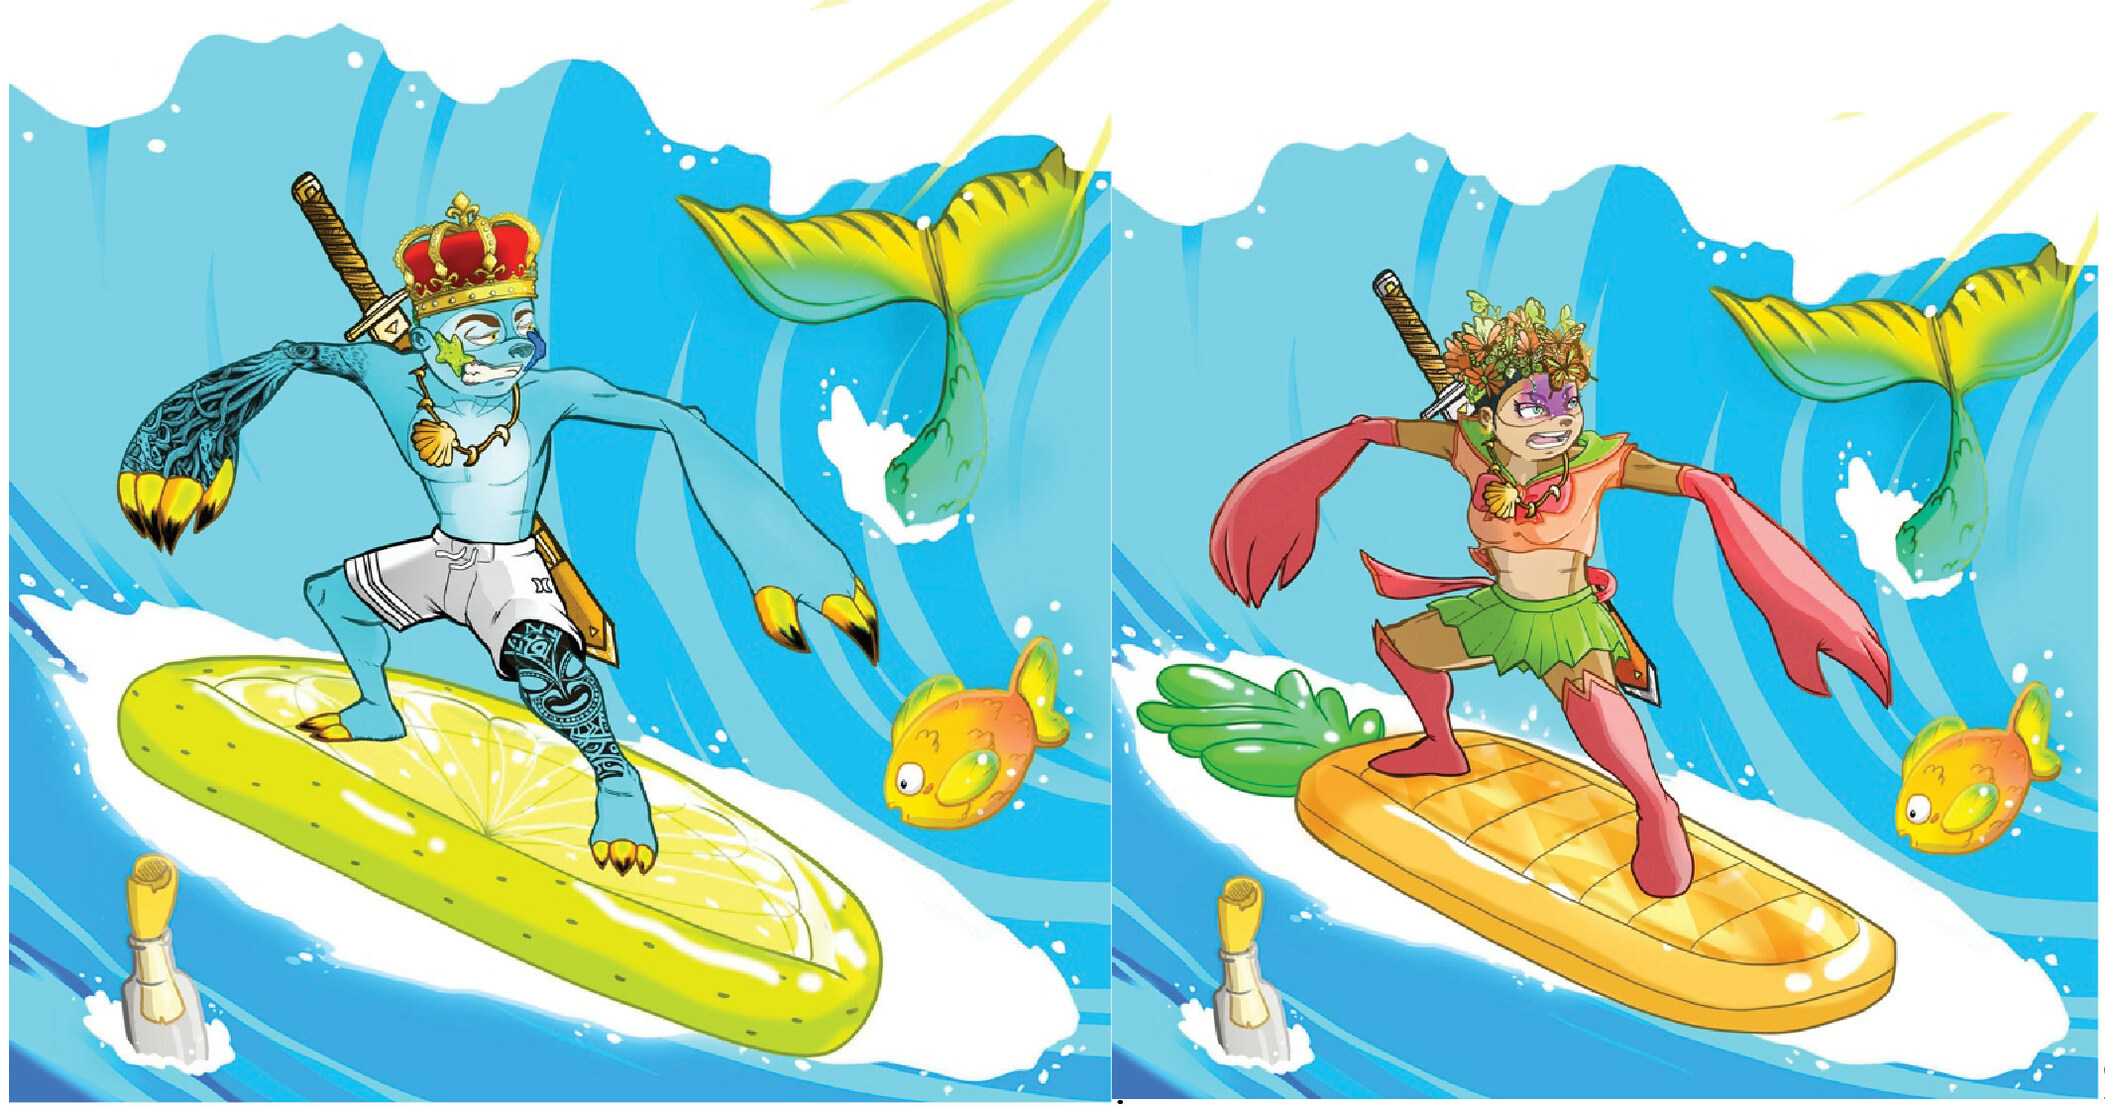 Hurley Dives into NFTs with Super Surfer Game - NFT Plazas